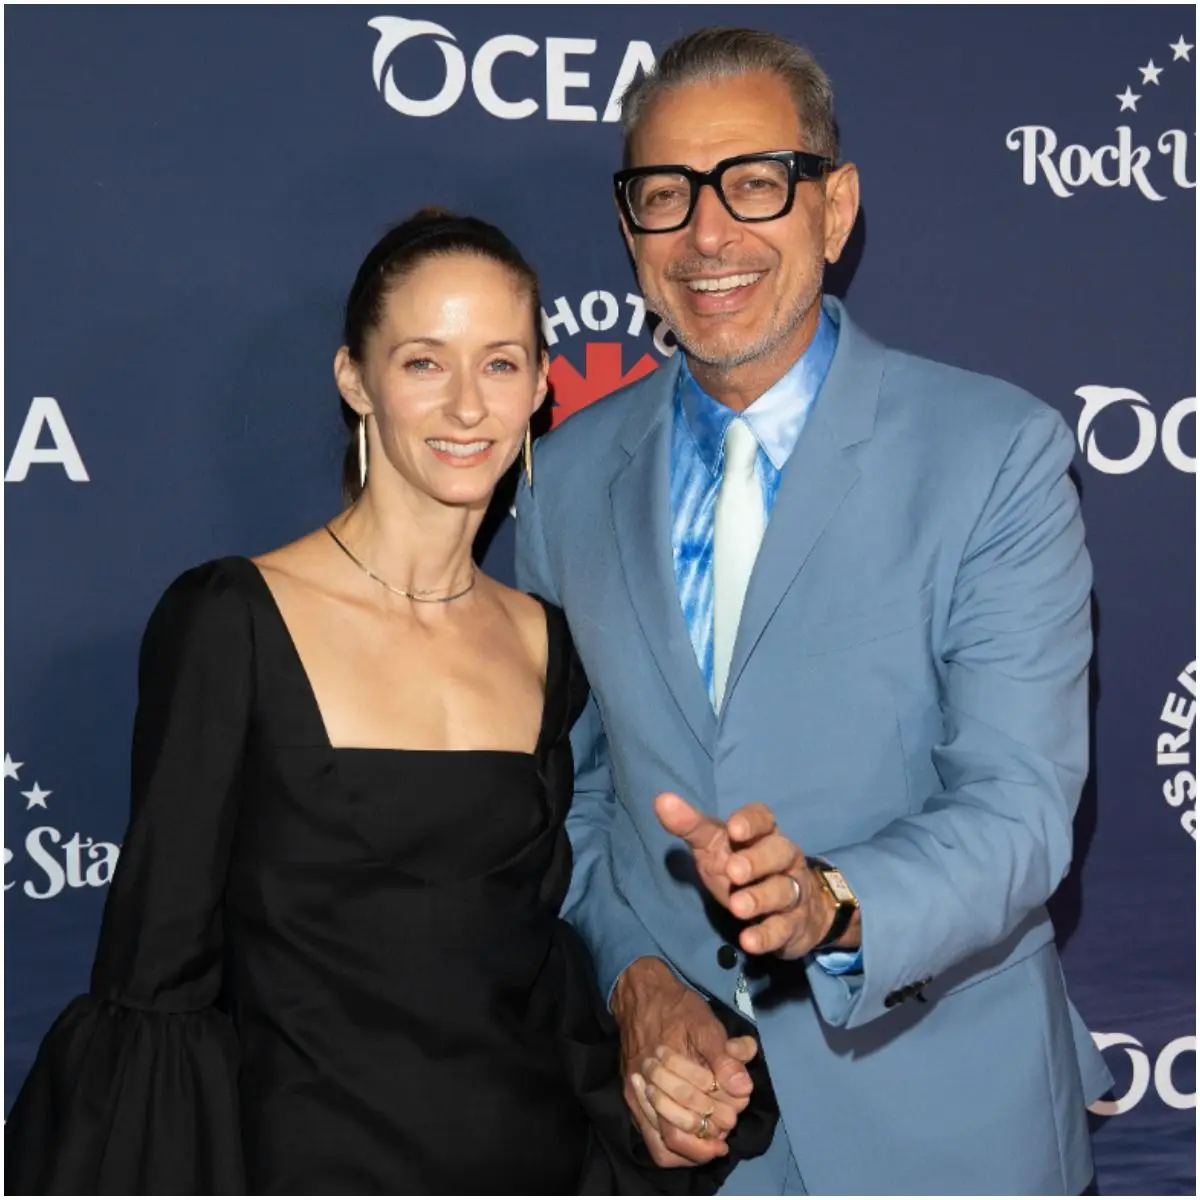 Jeff Goldblum and wife Emilie Livingston